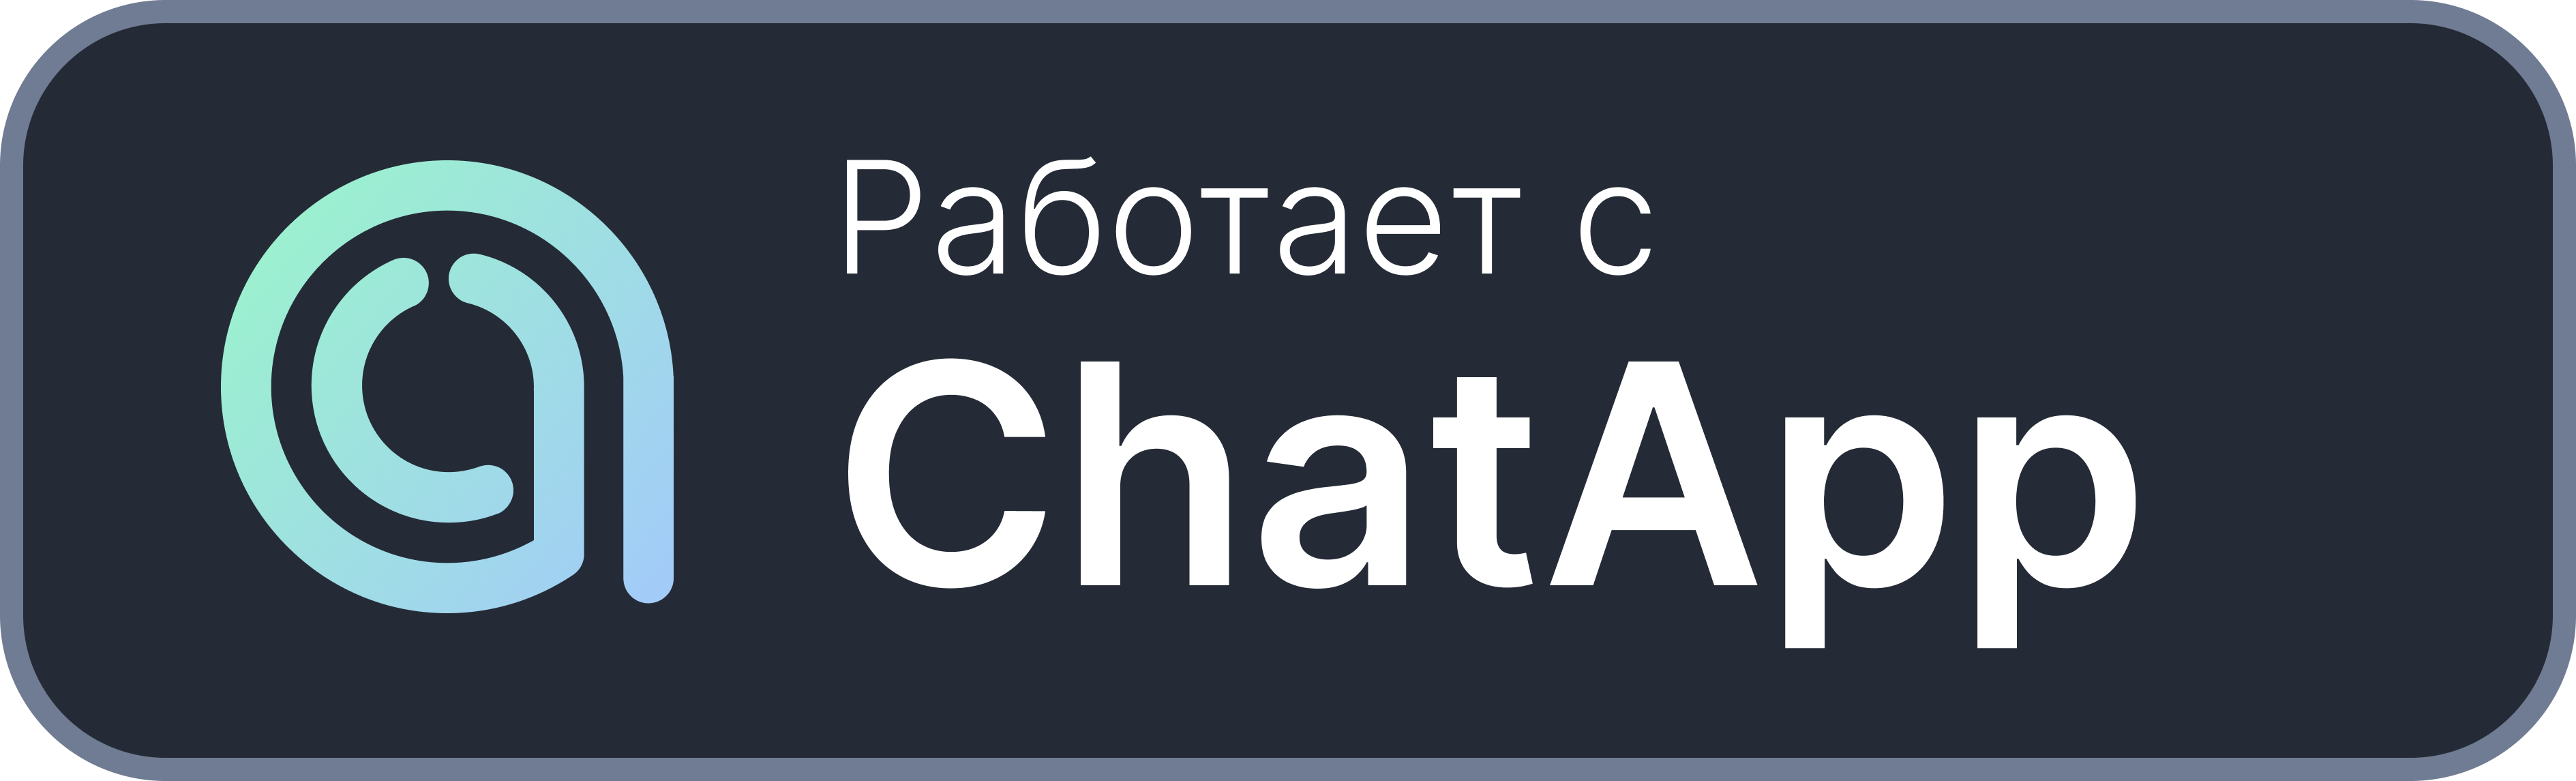 chatapp